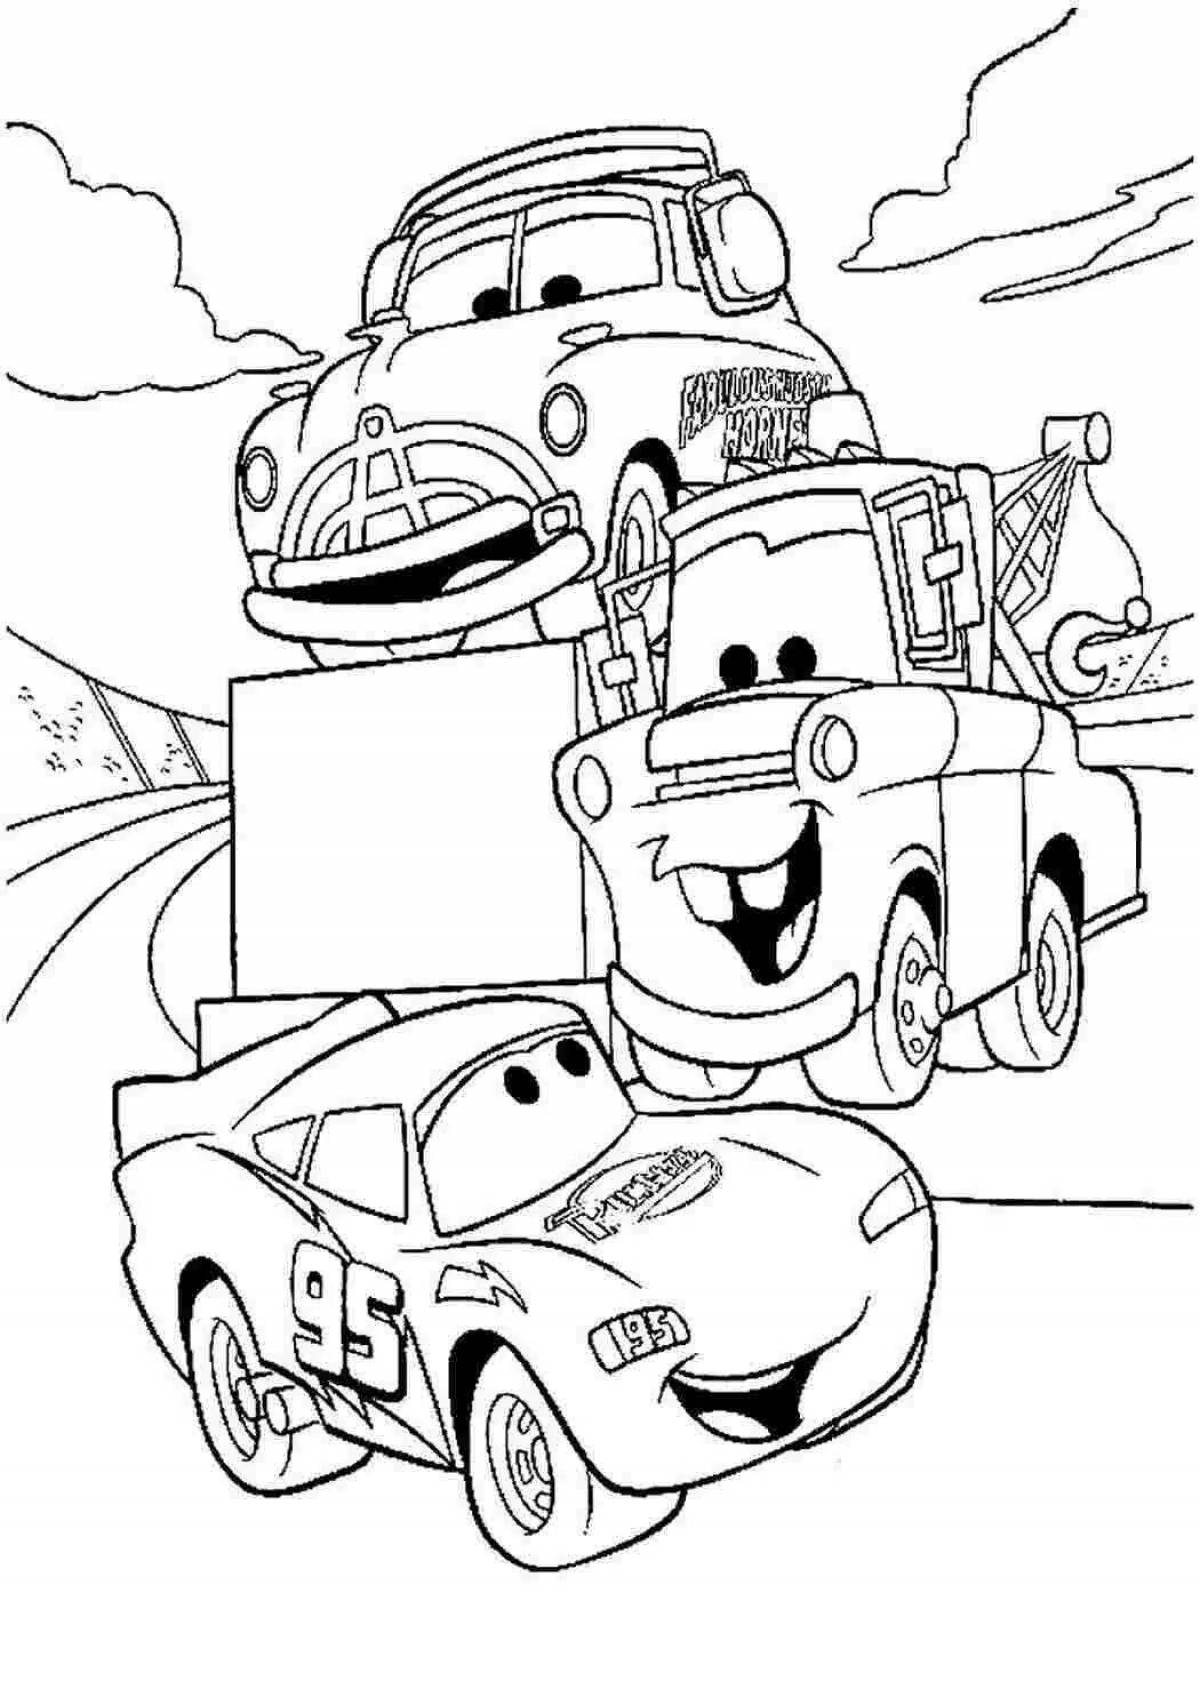 Funny cartoon cars coloring book